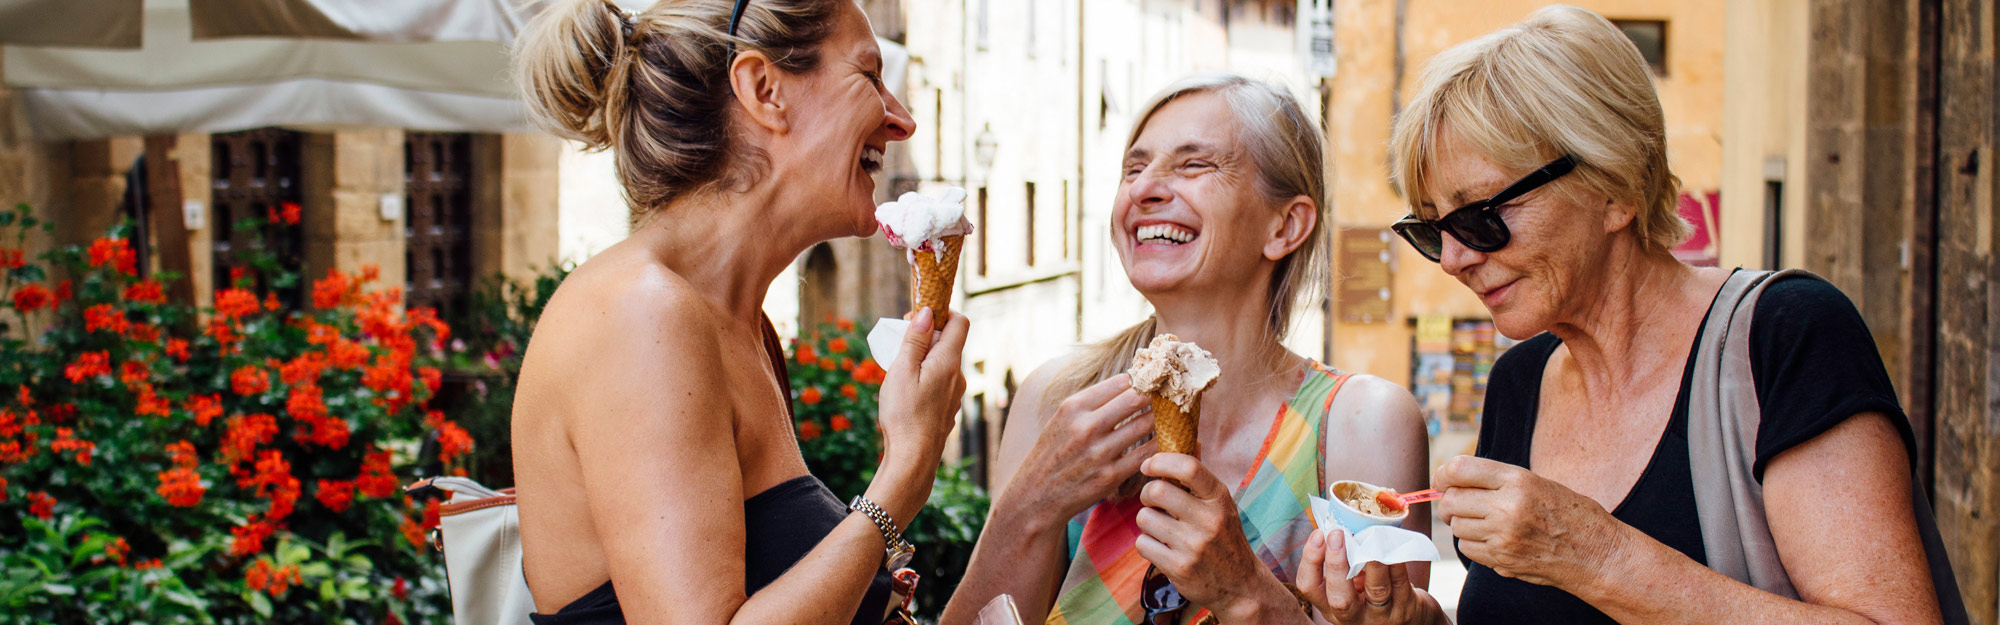 Tre glada äldre kvinnor äter glass i stan en sommardag